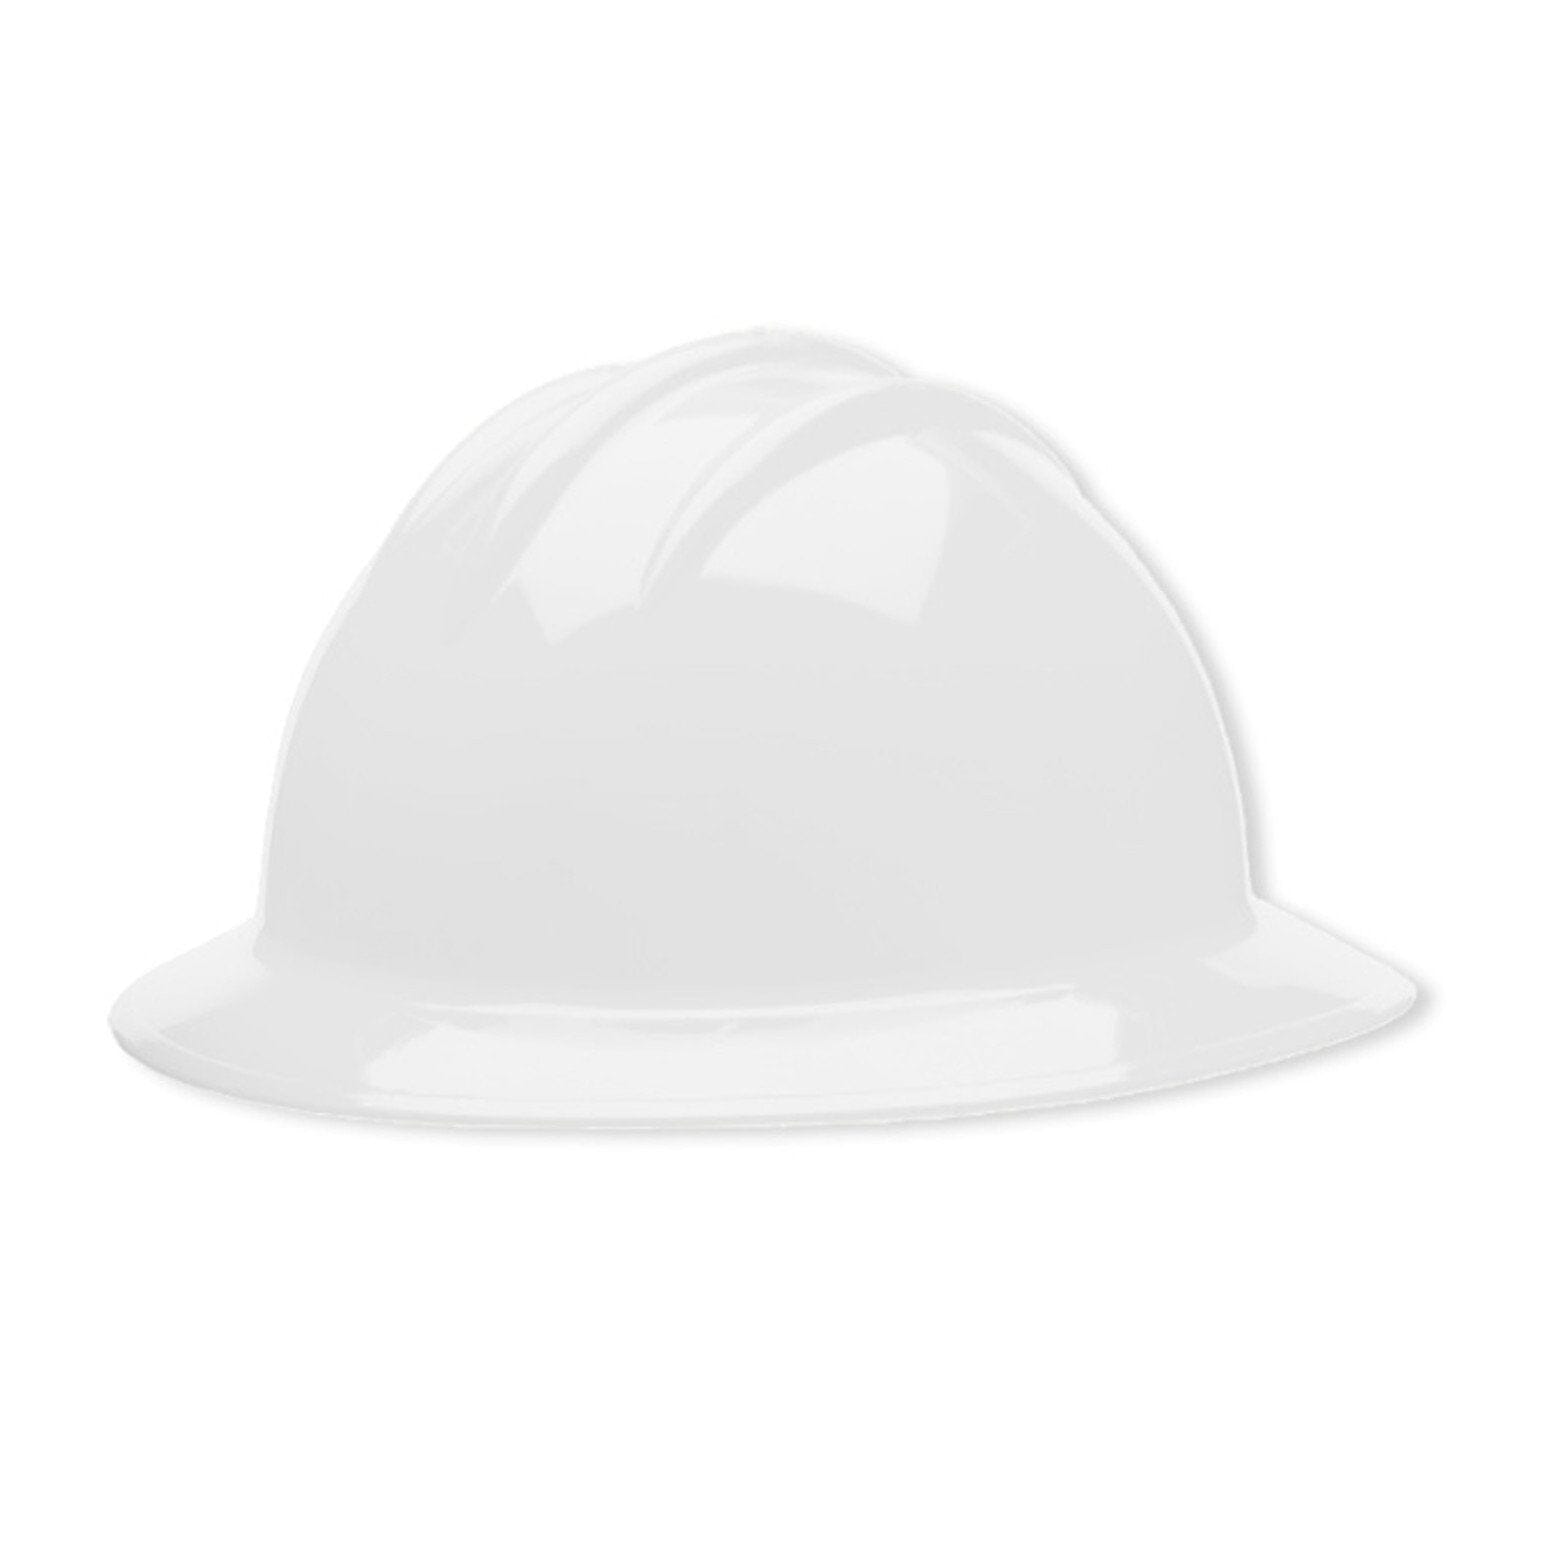 Bullard - White Hard Hat - C-34W, Bullard - J.L. Matthews Co., Inc.